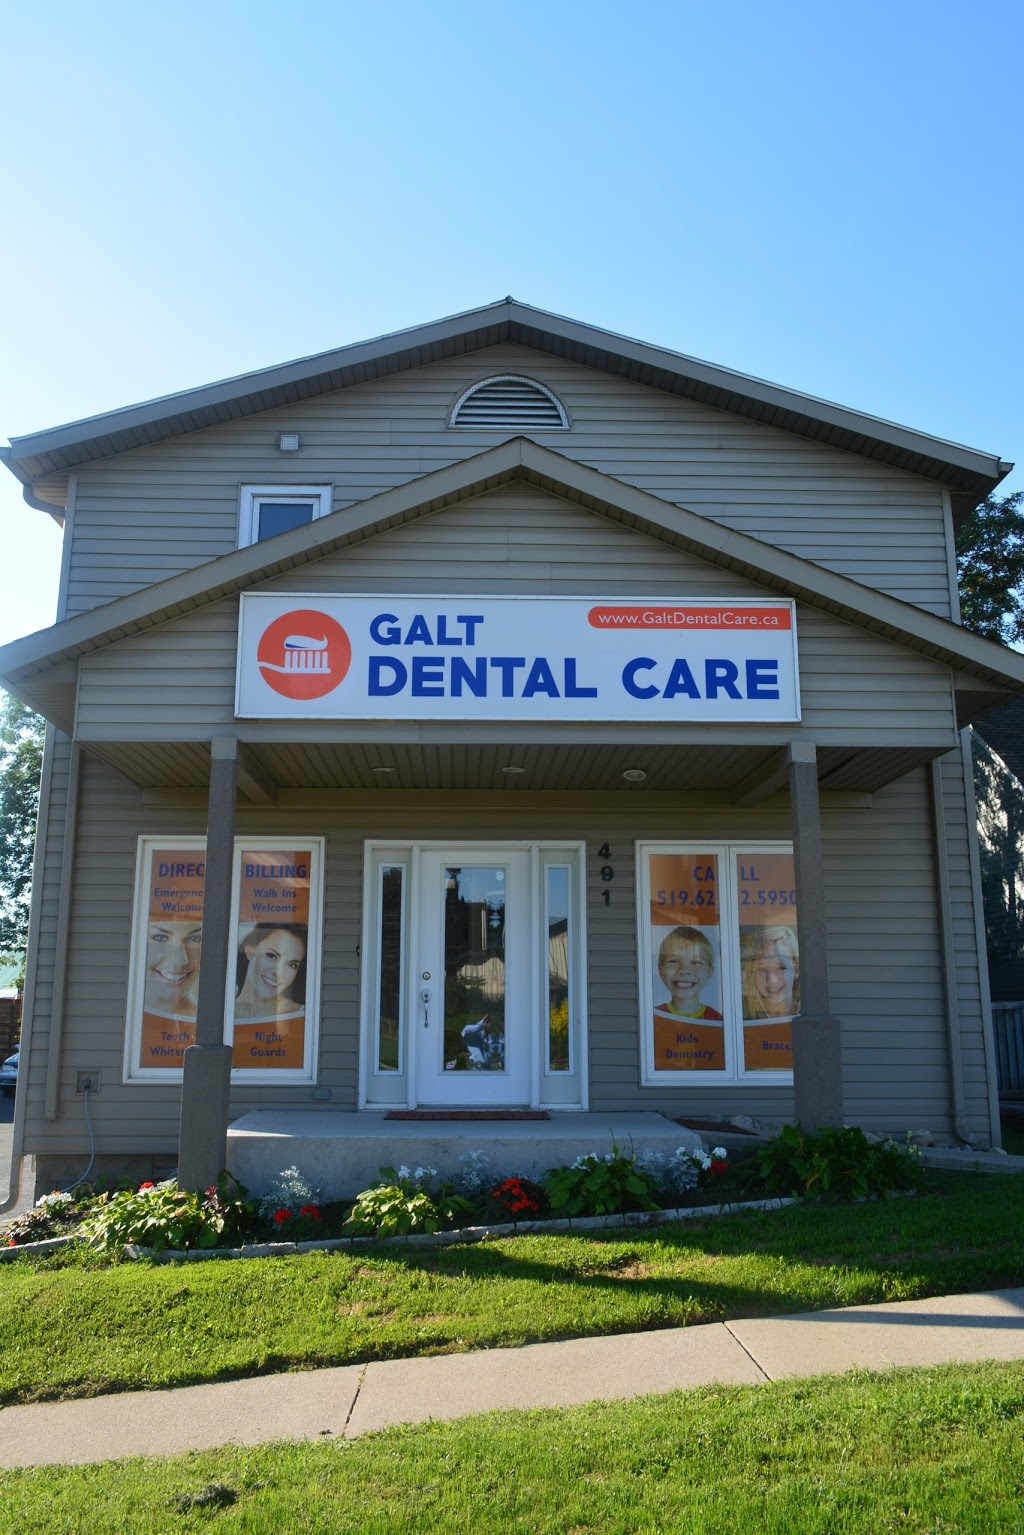 Galt Dental Care | dentist | 491 Main St, Cambridge, ON N1R 5S7, Canada | 5196225950 OR +1 519-622-5950